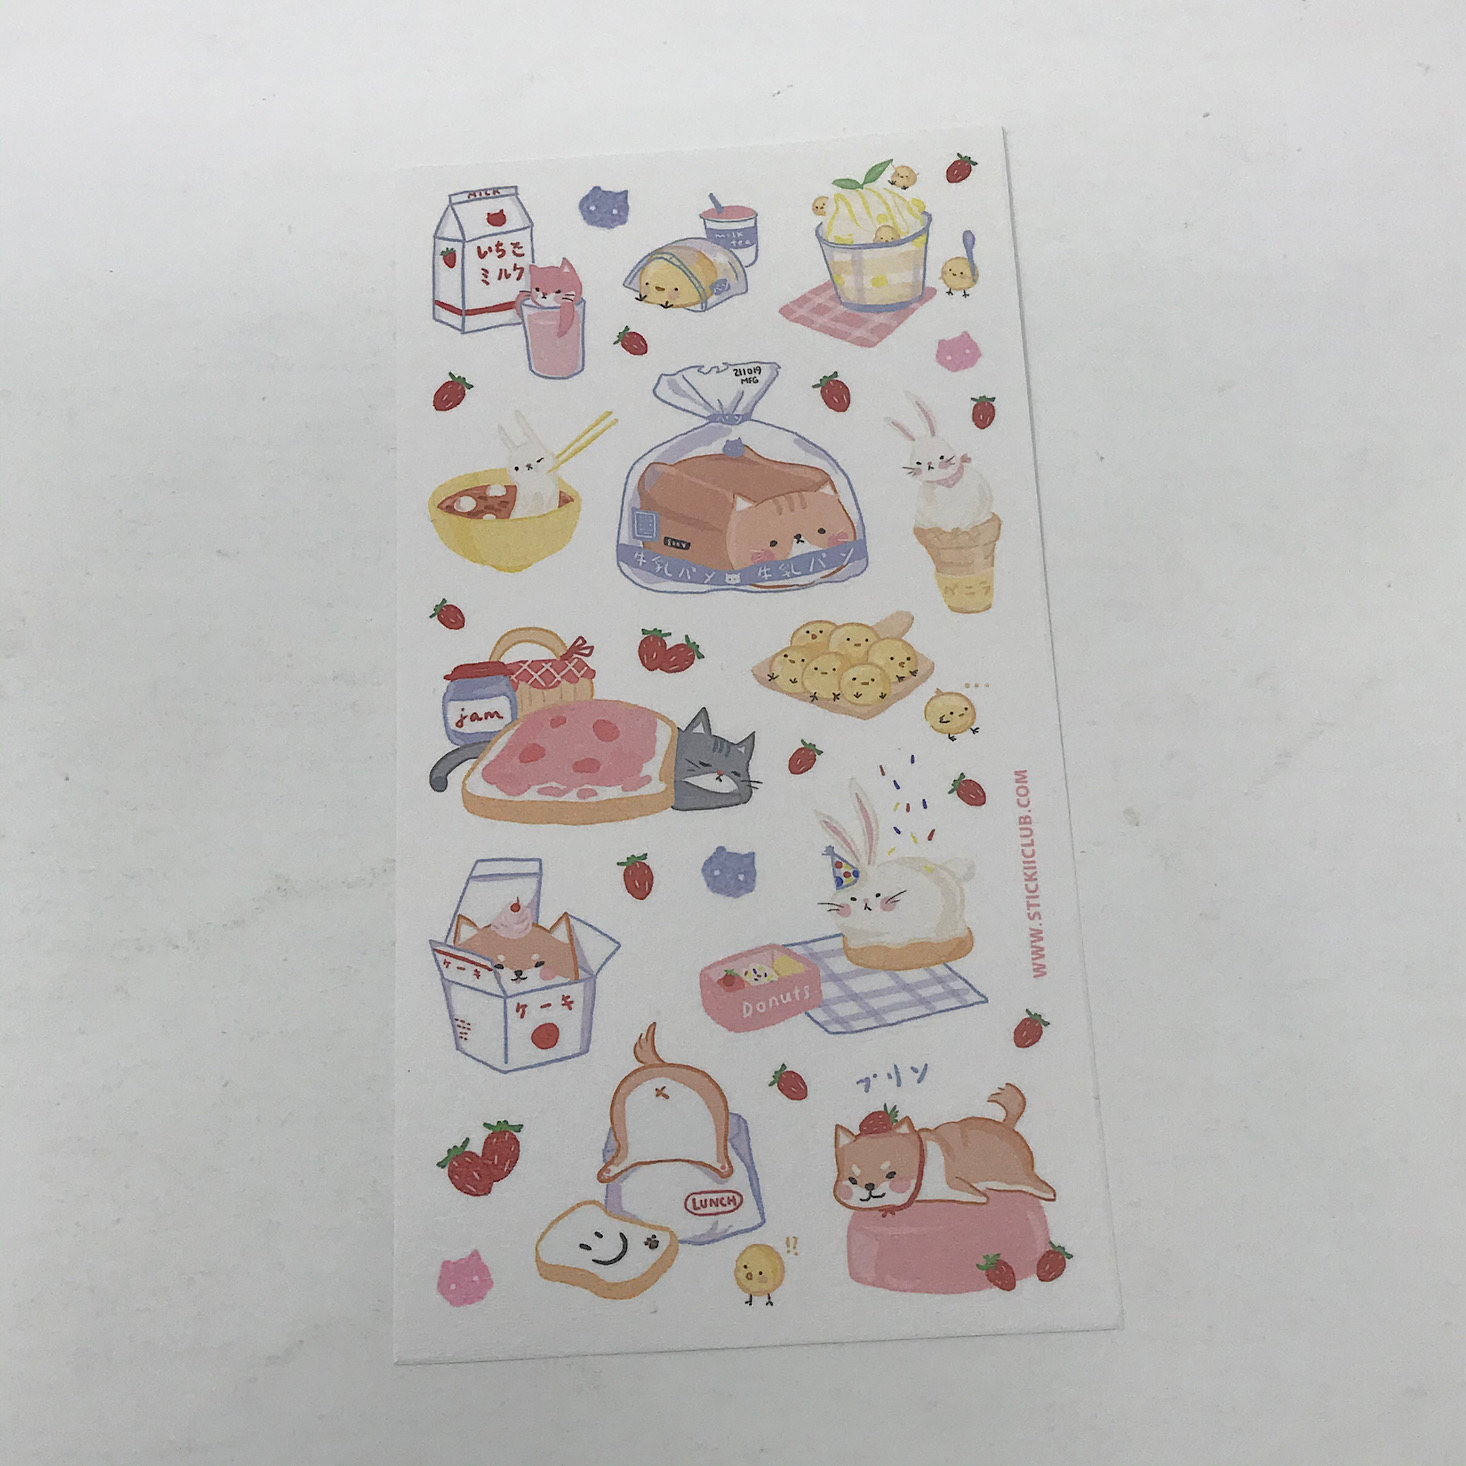 Stickii Sticker Cute Pack Review - January 2020 | MSA